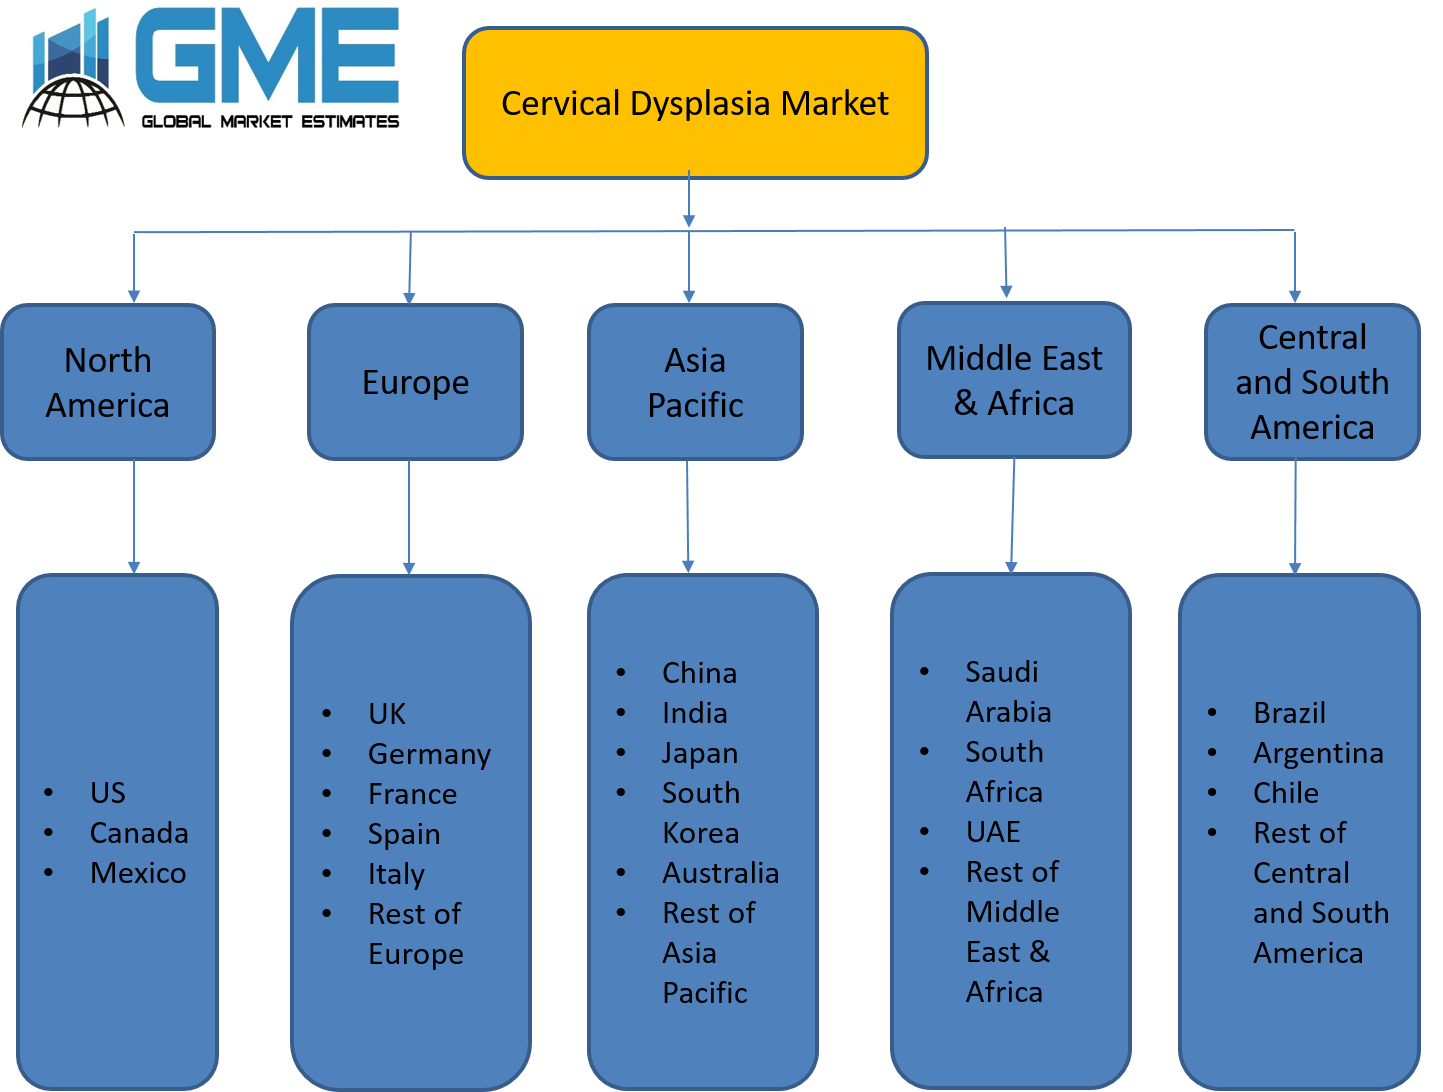 Cervical Dysplasia Market - Regional Analysis